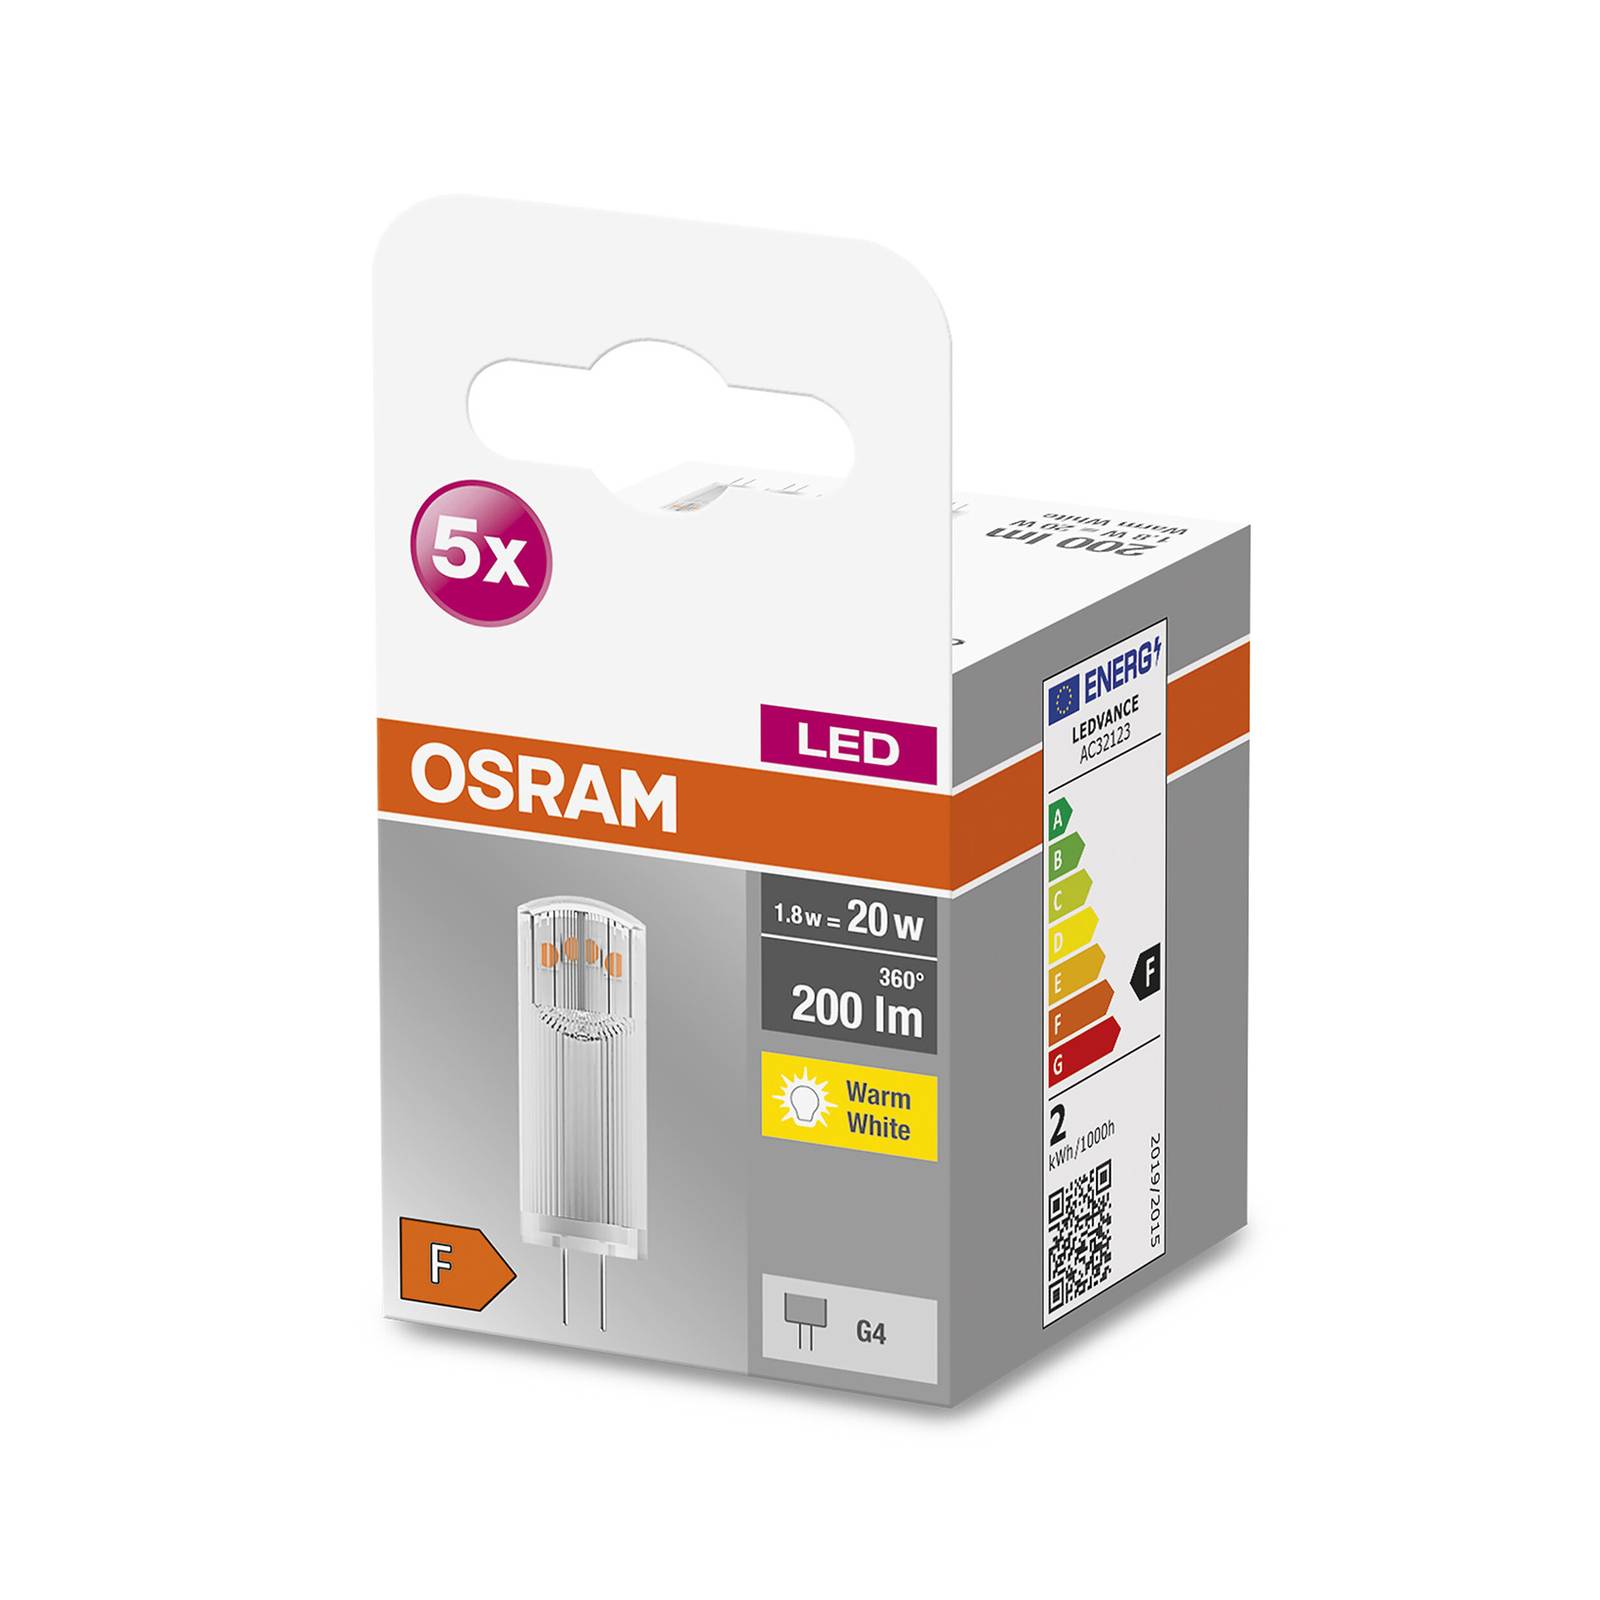 OSRAM Base PIN LED broche G4 1,8 W 200 lm x5